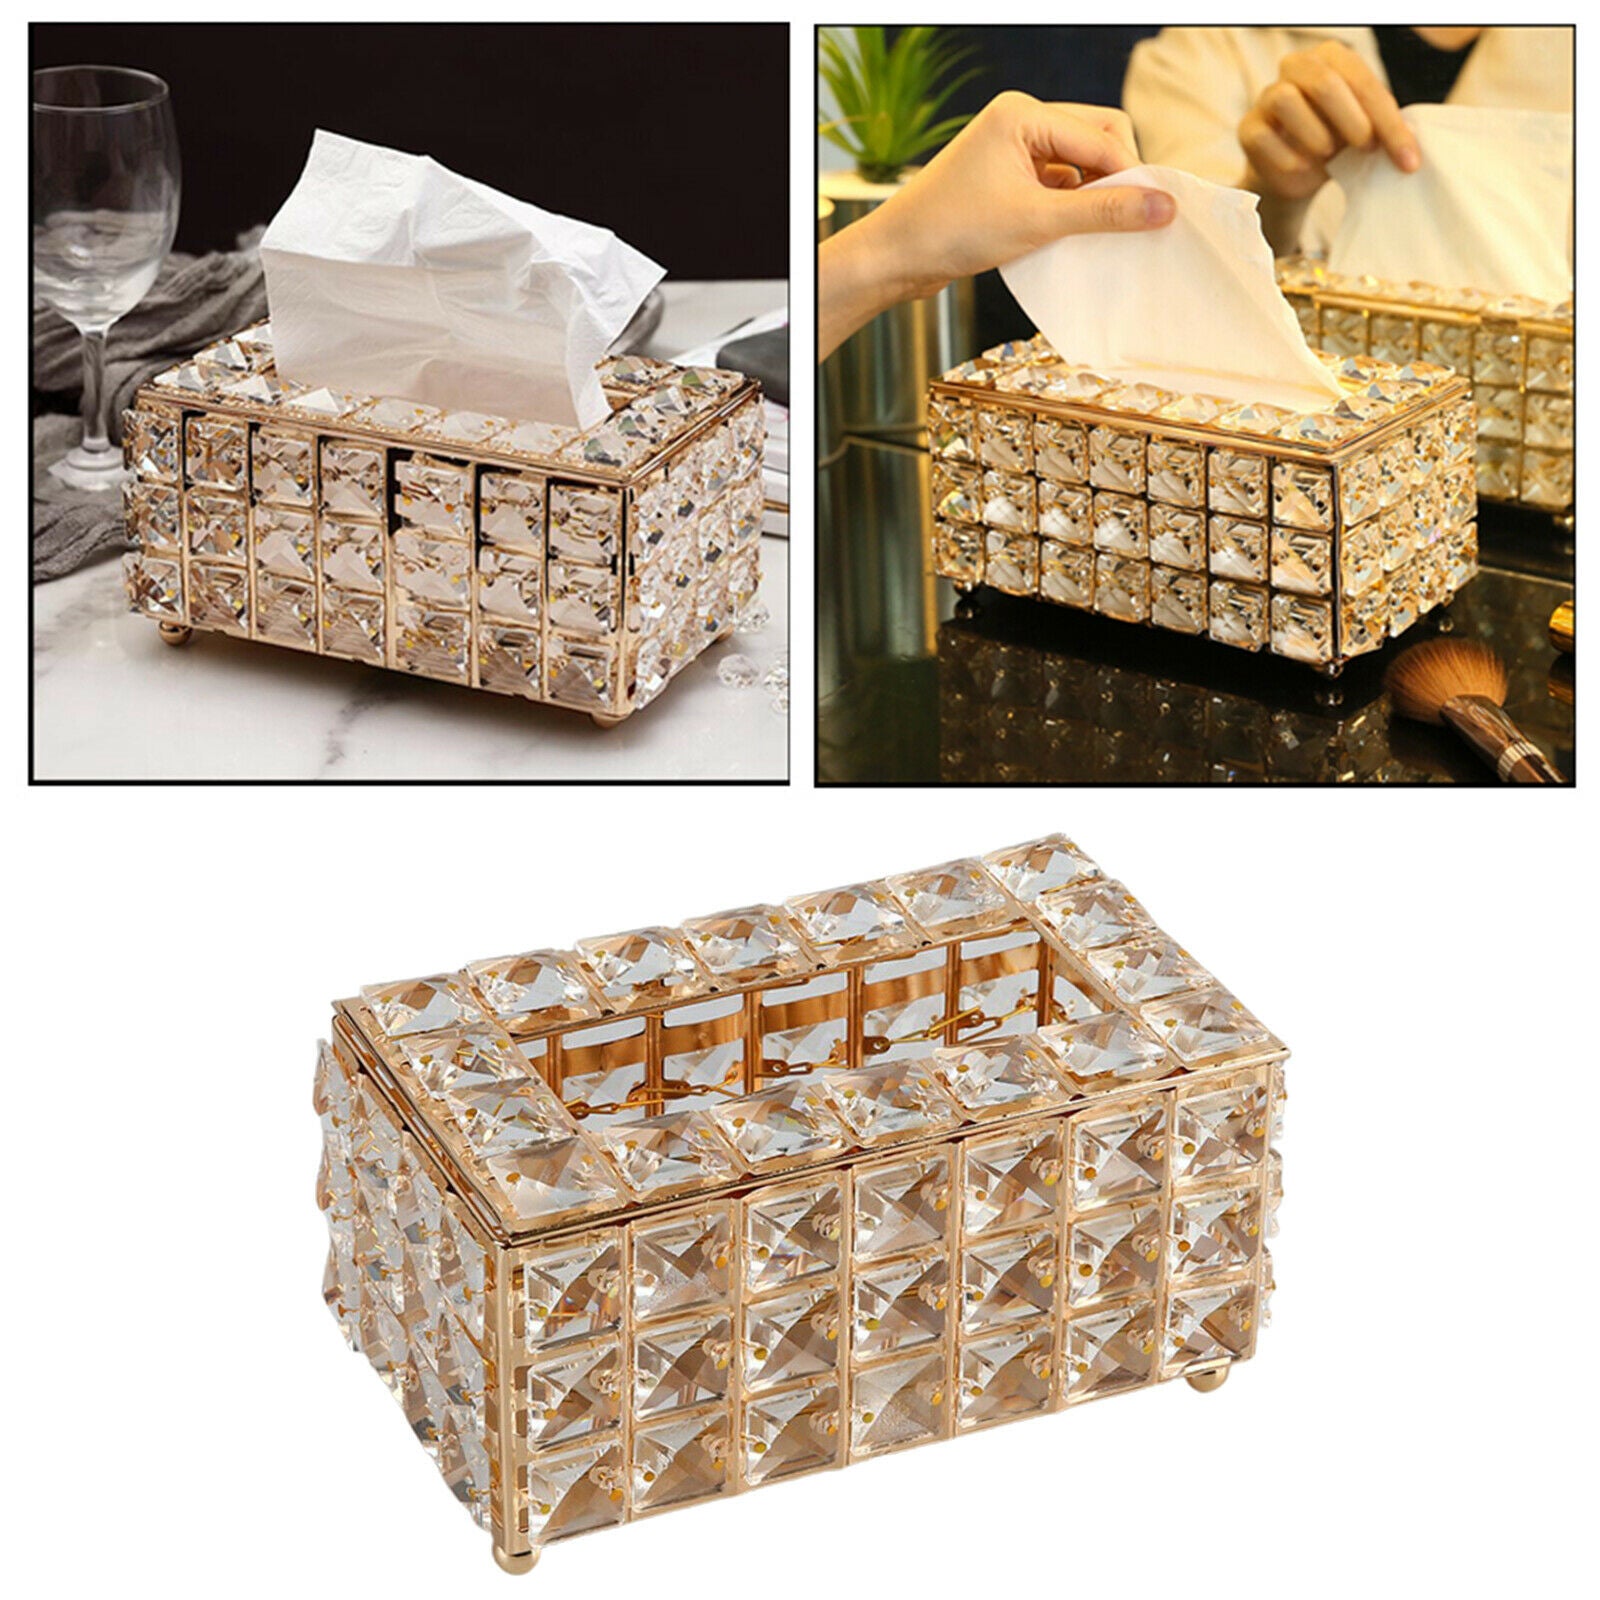 2X Luxury Crystal Tissue Box Covers Napkin Paper Holder Organizer Golden